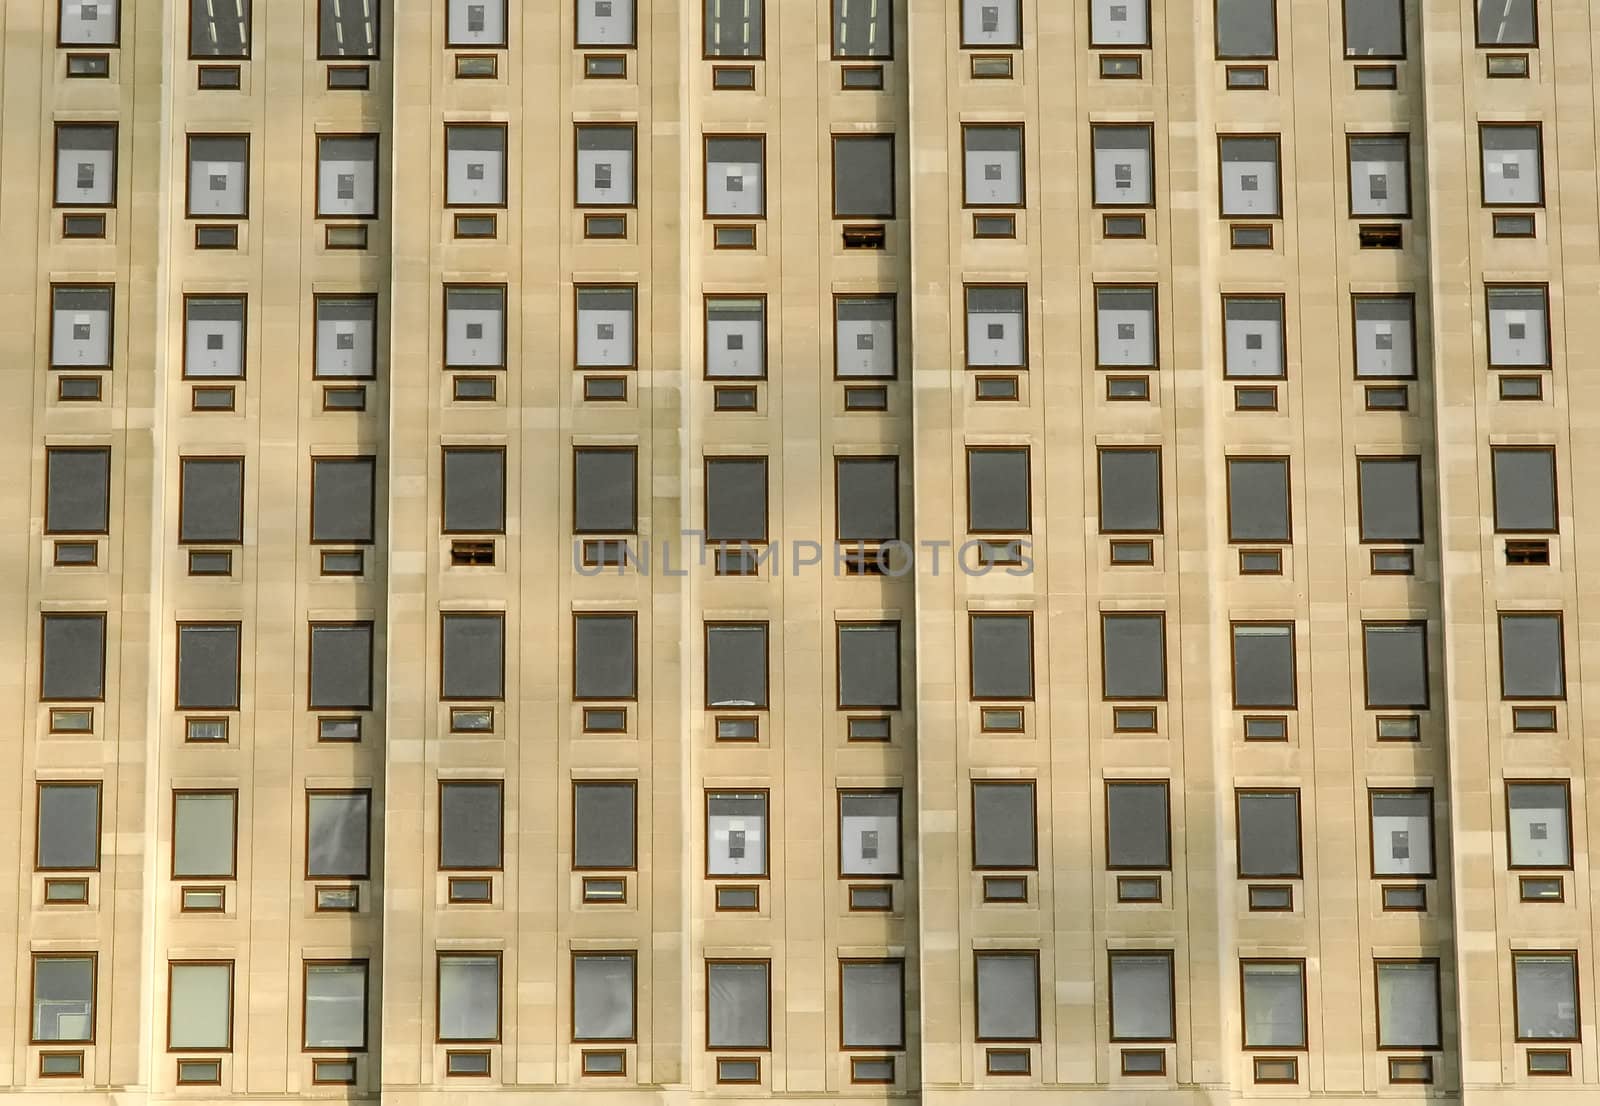 background of multiple office block windows